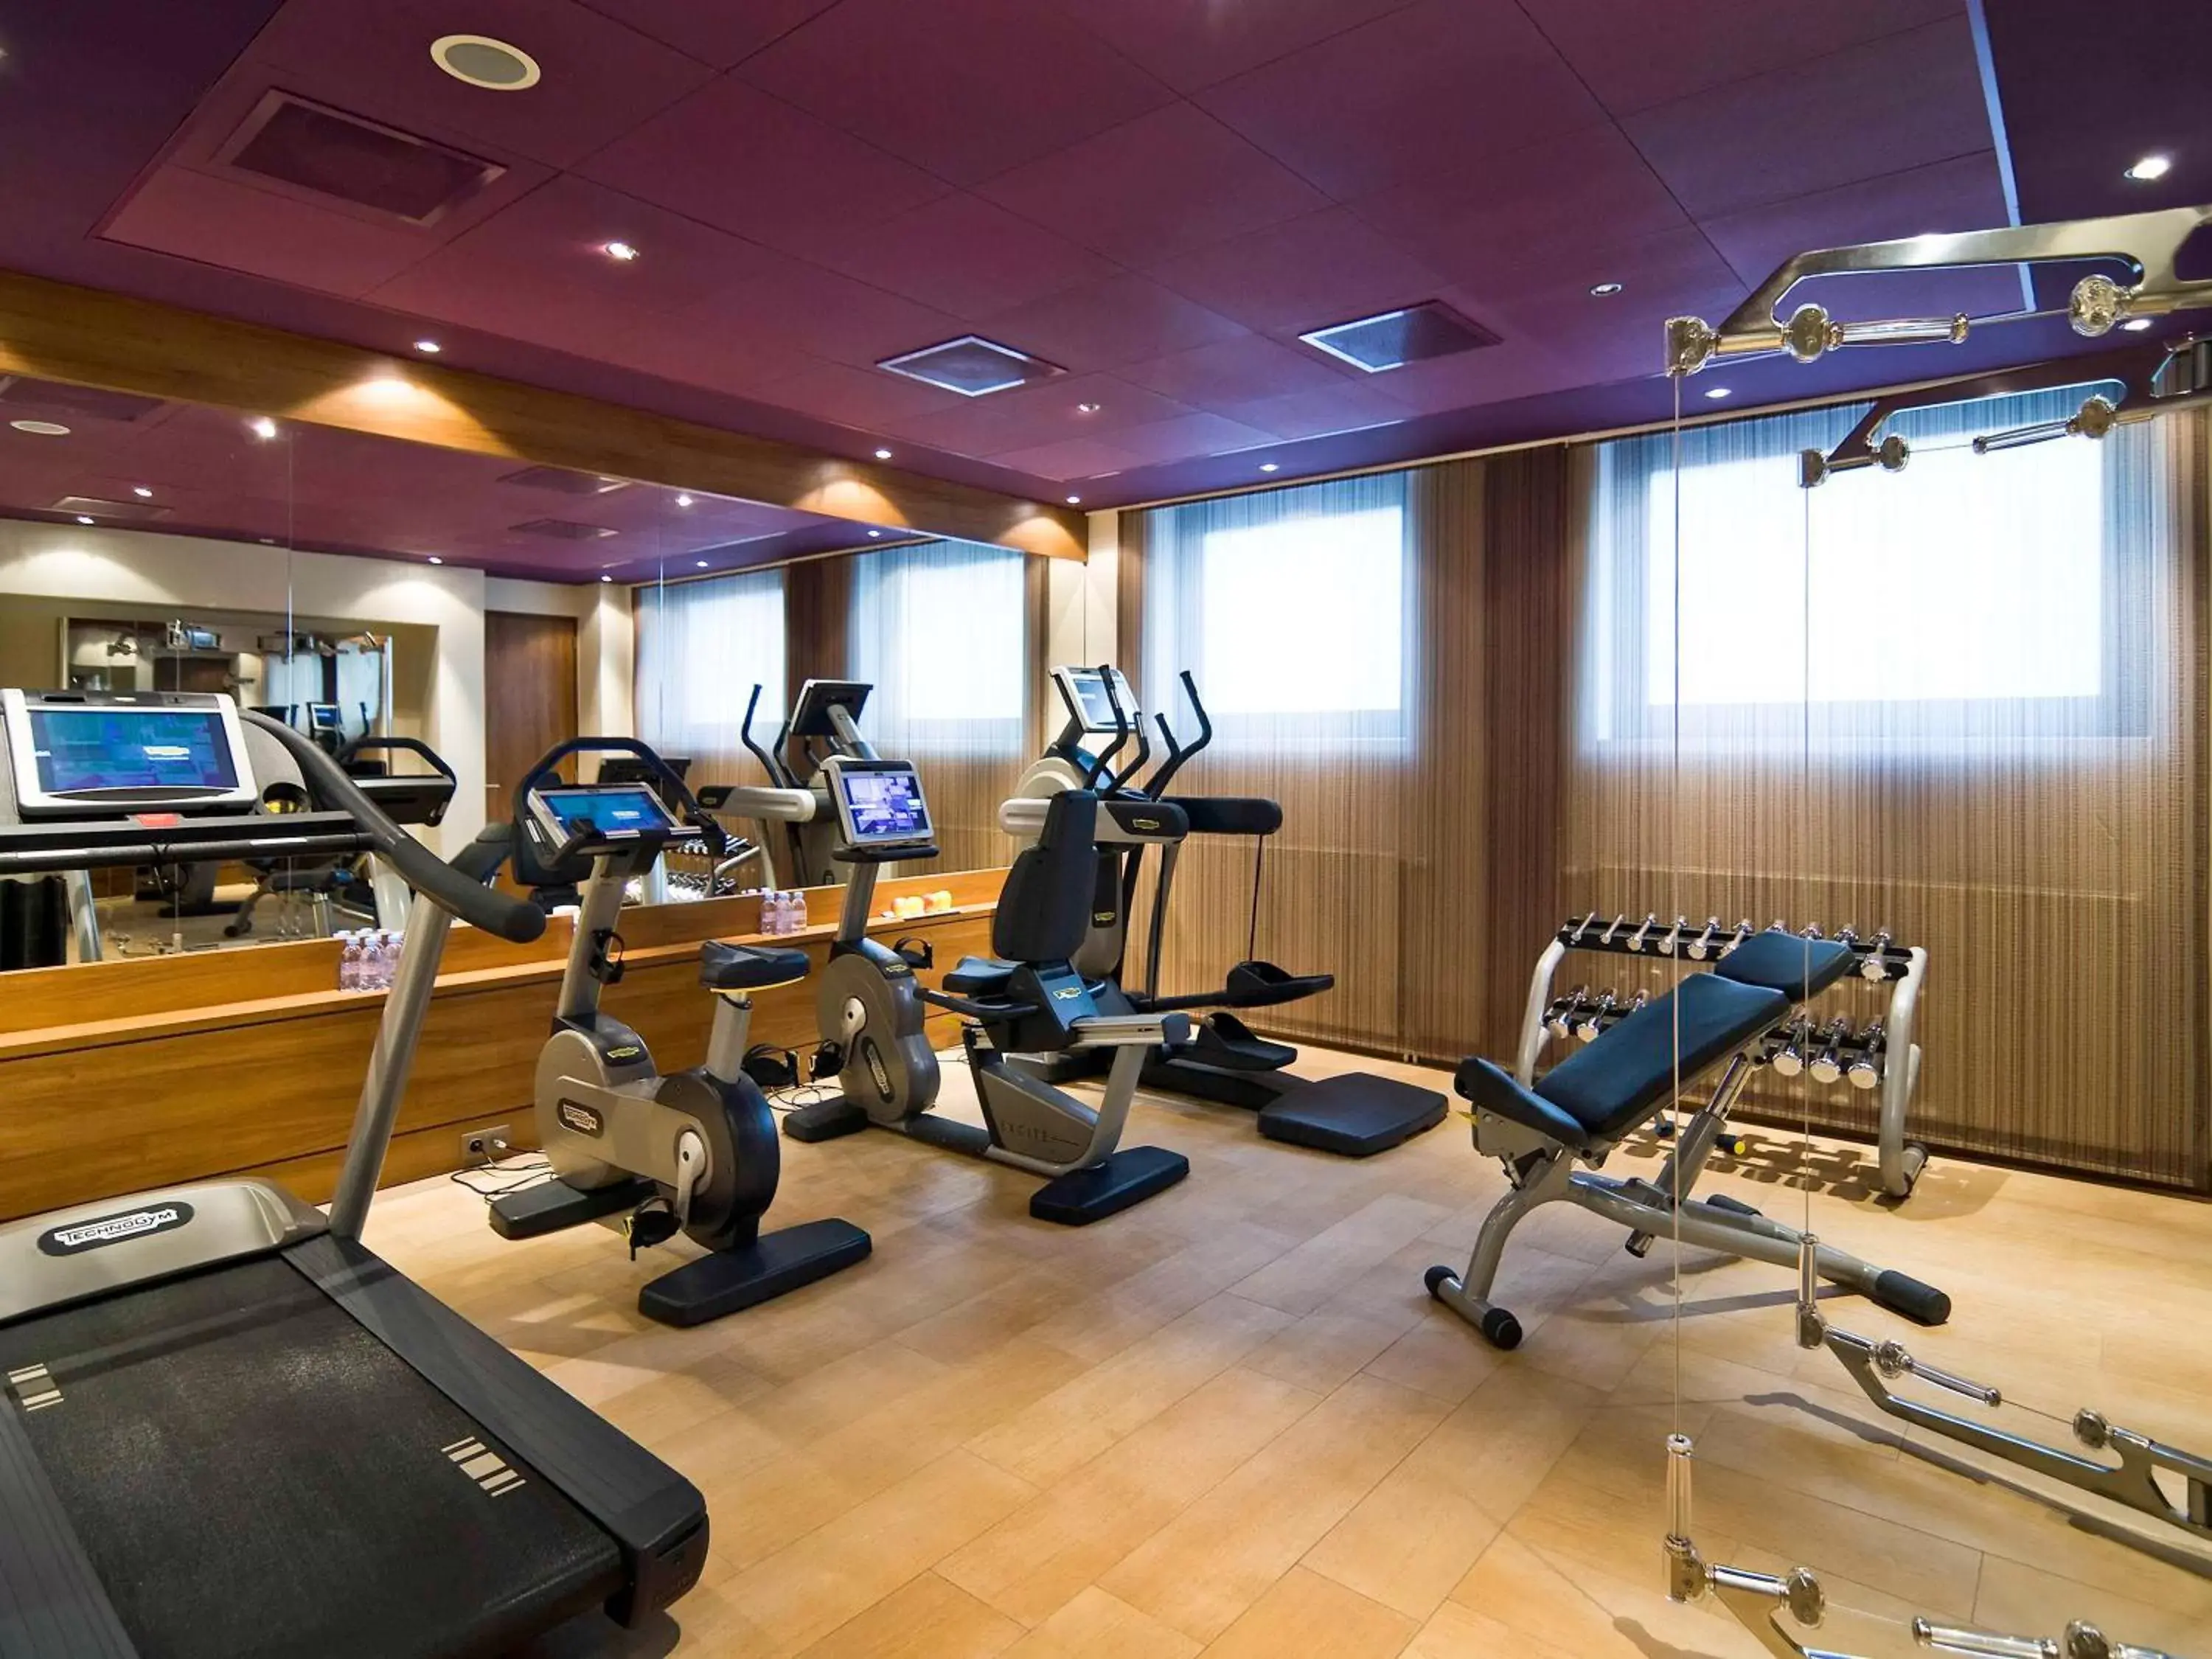 Fitness centre/facilities, Fitness Center/Facilities in Sofitel Legend The Grand Amsterdam